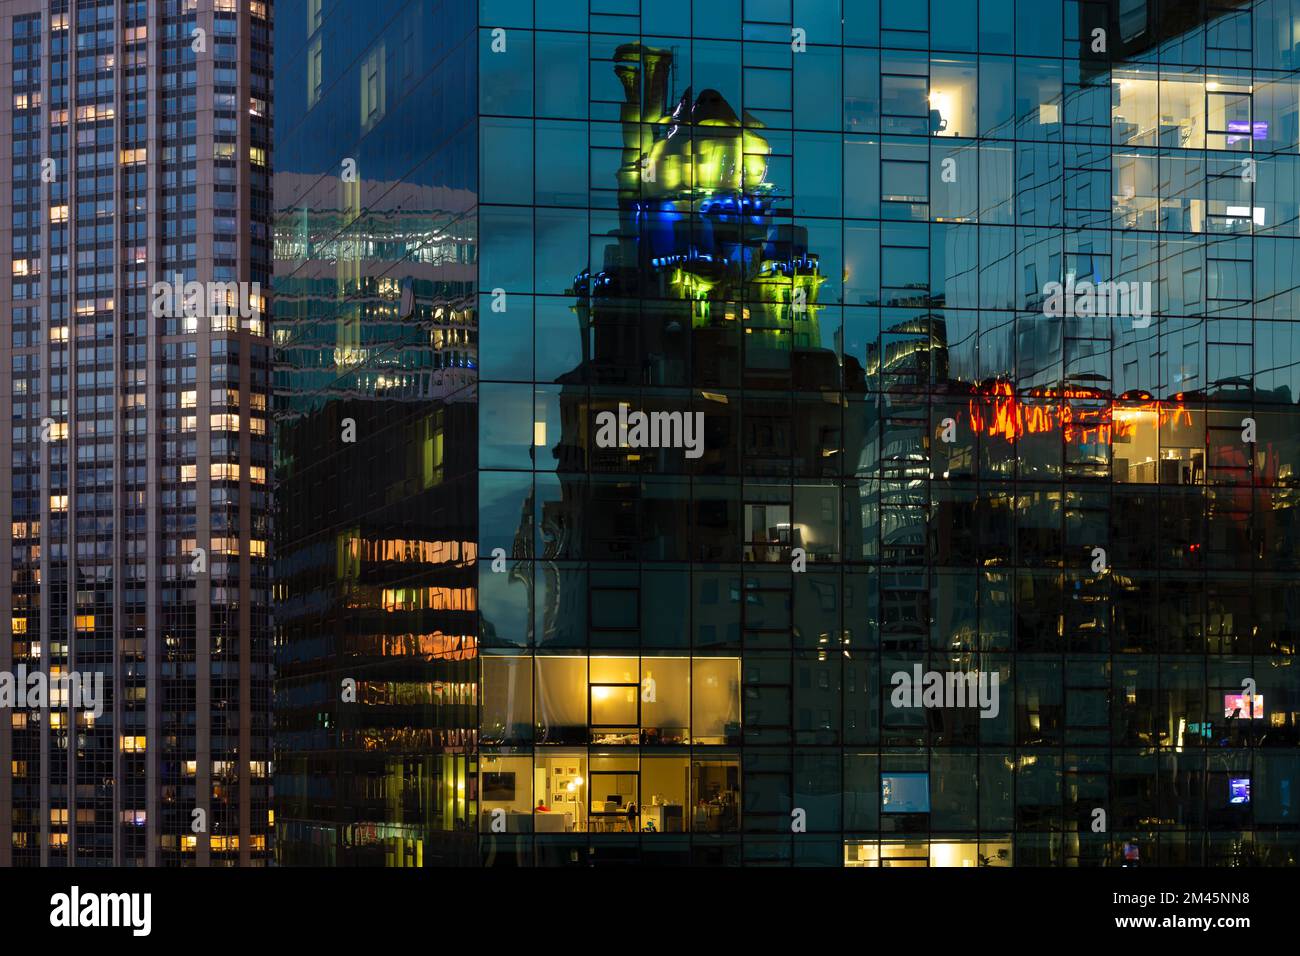 Spiegelung des InterContinental Hotels in Magnificent Mile, Chicago. Stockfoto